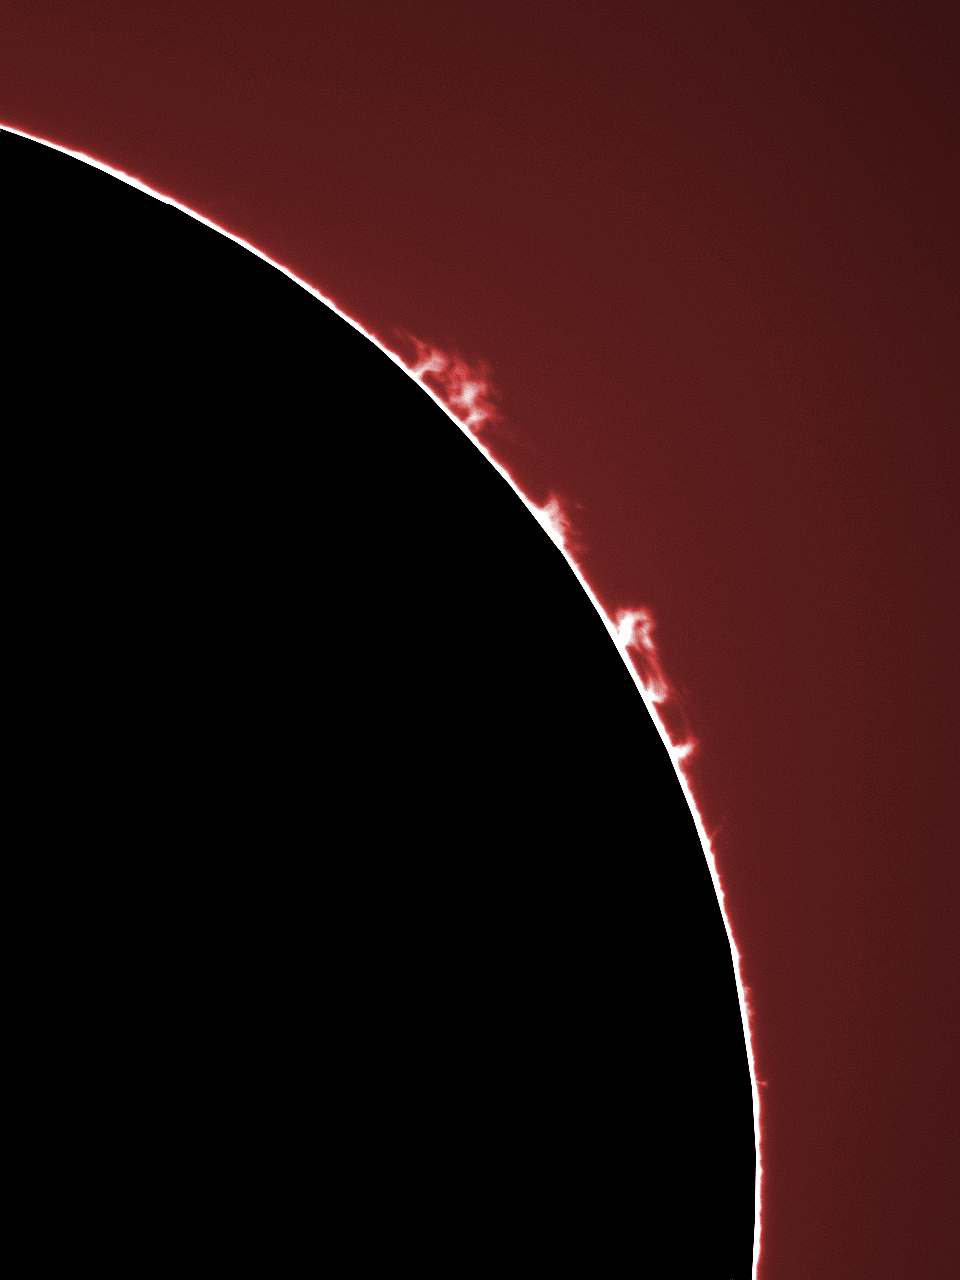 Sonneaufnahme mit Lunt-Sonnenteleskop